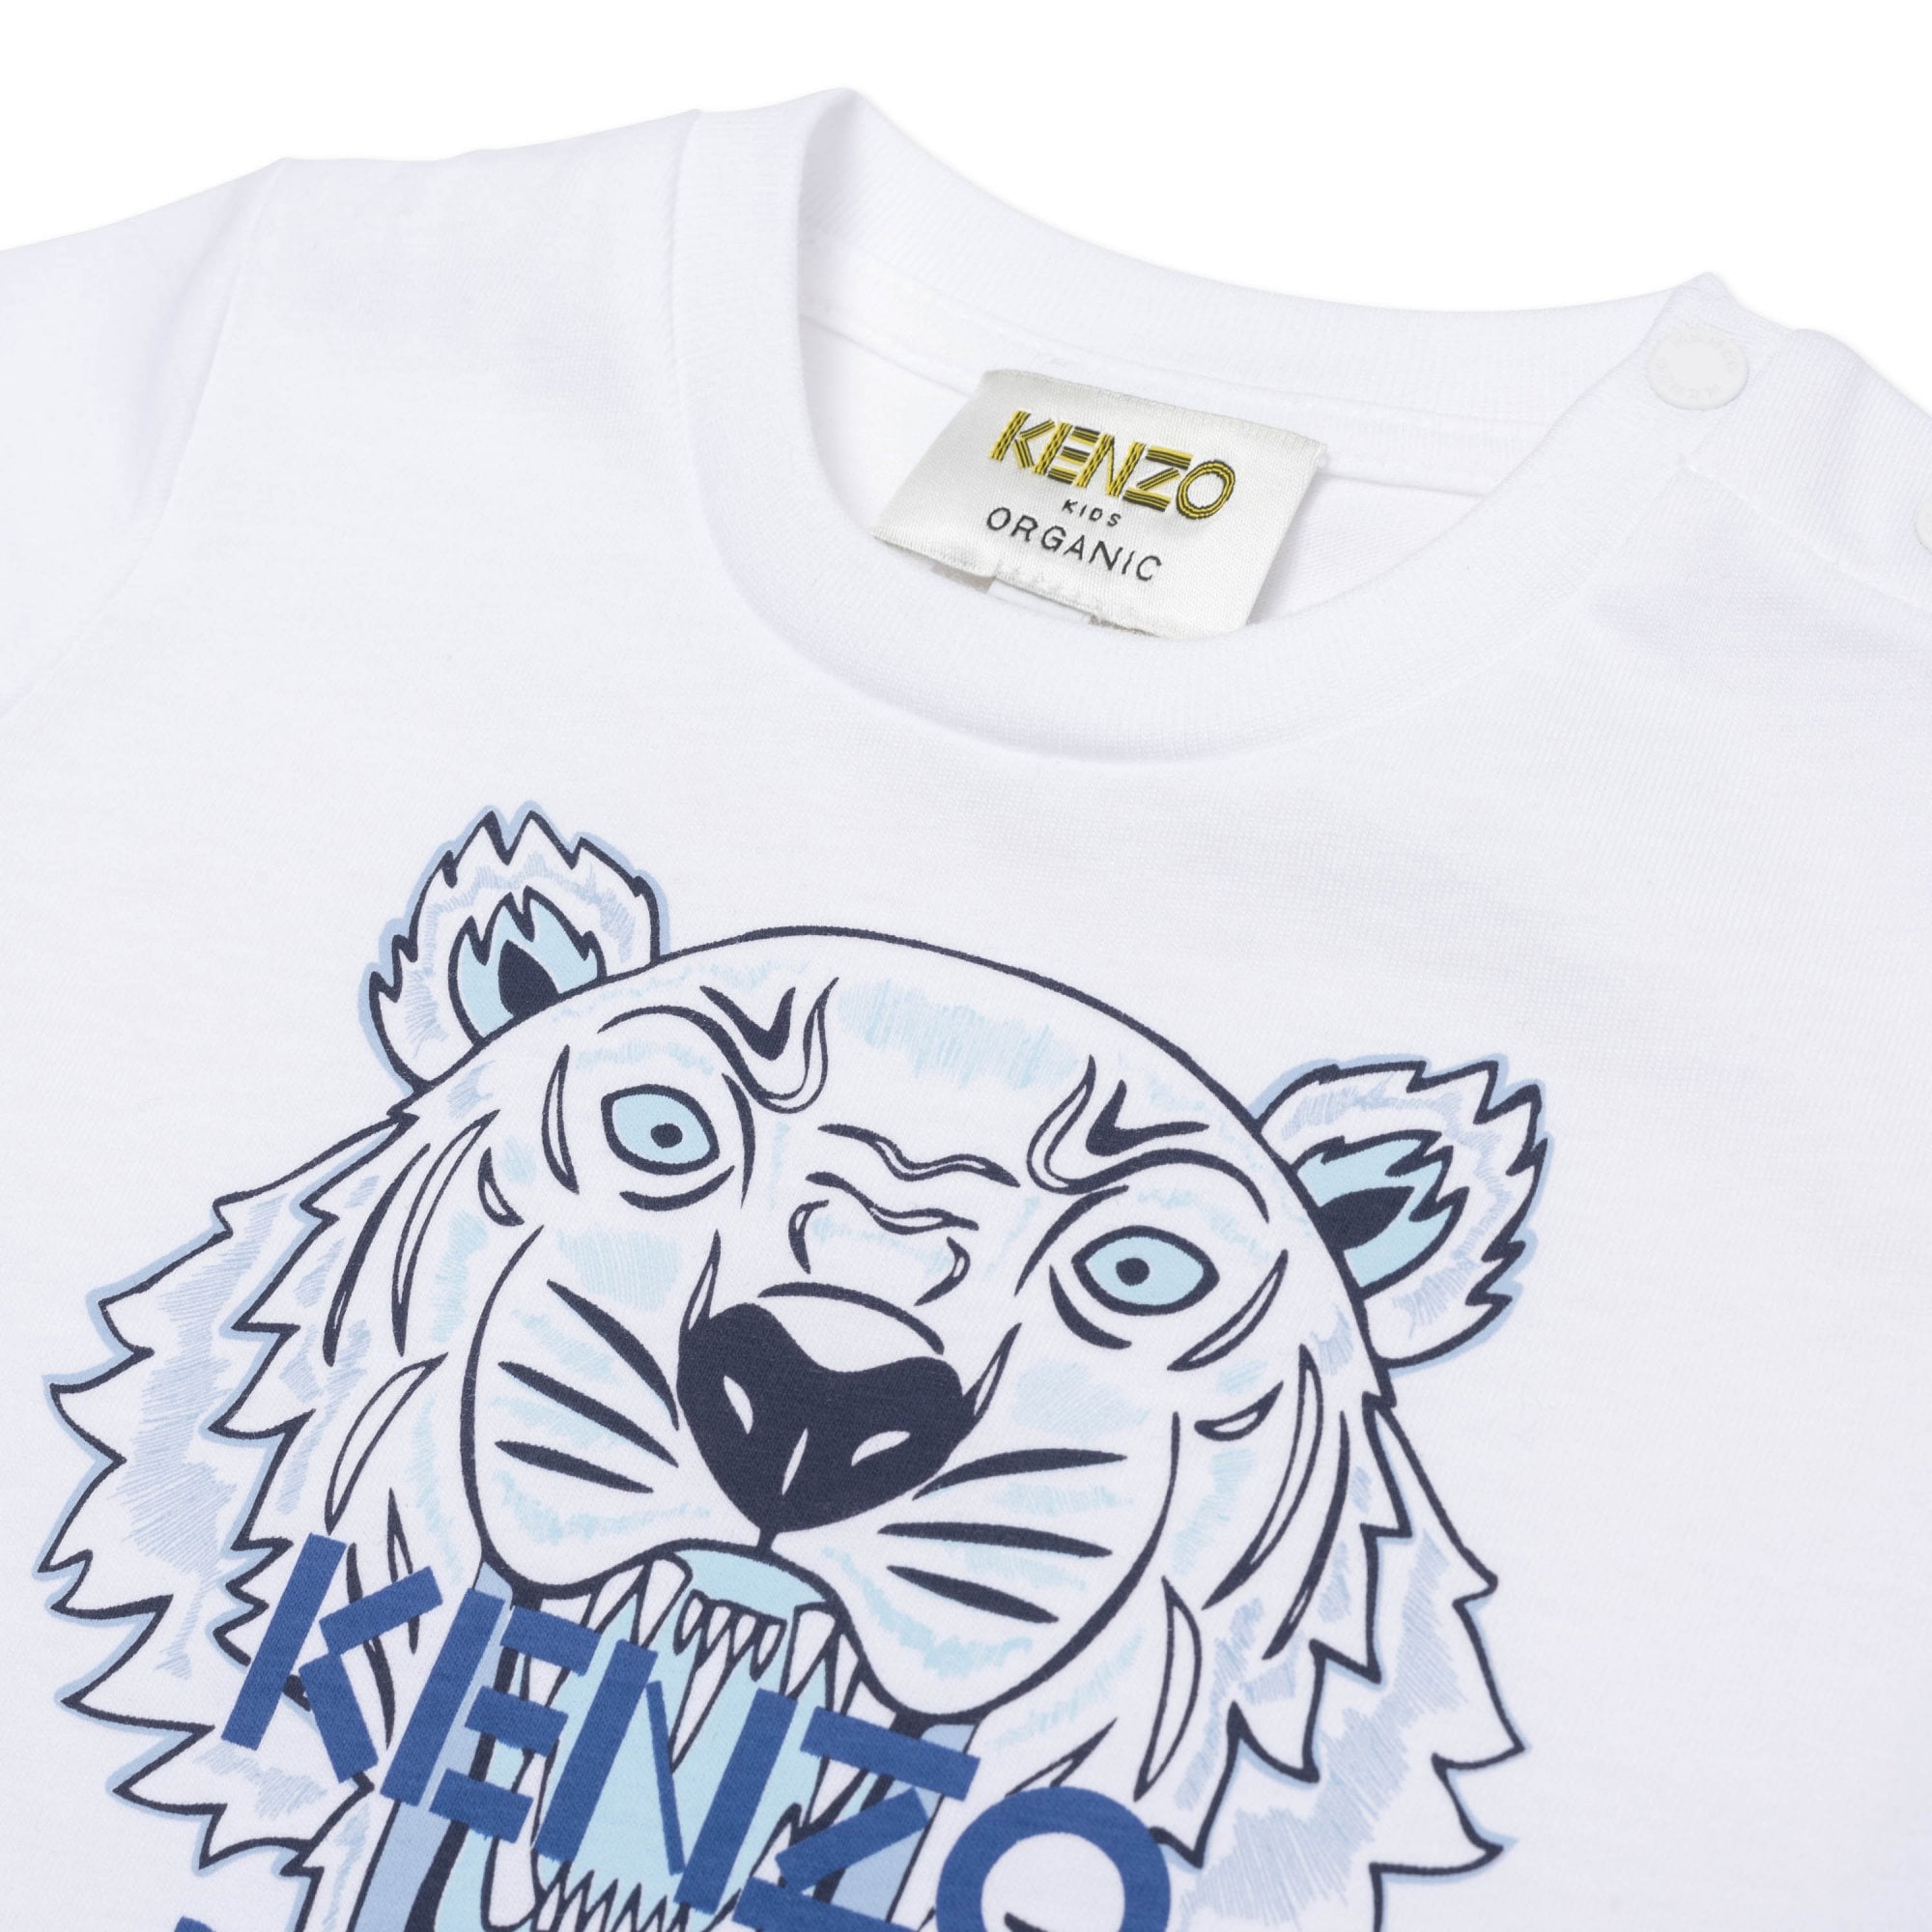 Kenzo Baby Boys Tiger Print T-shirt White 12M